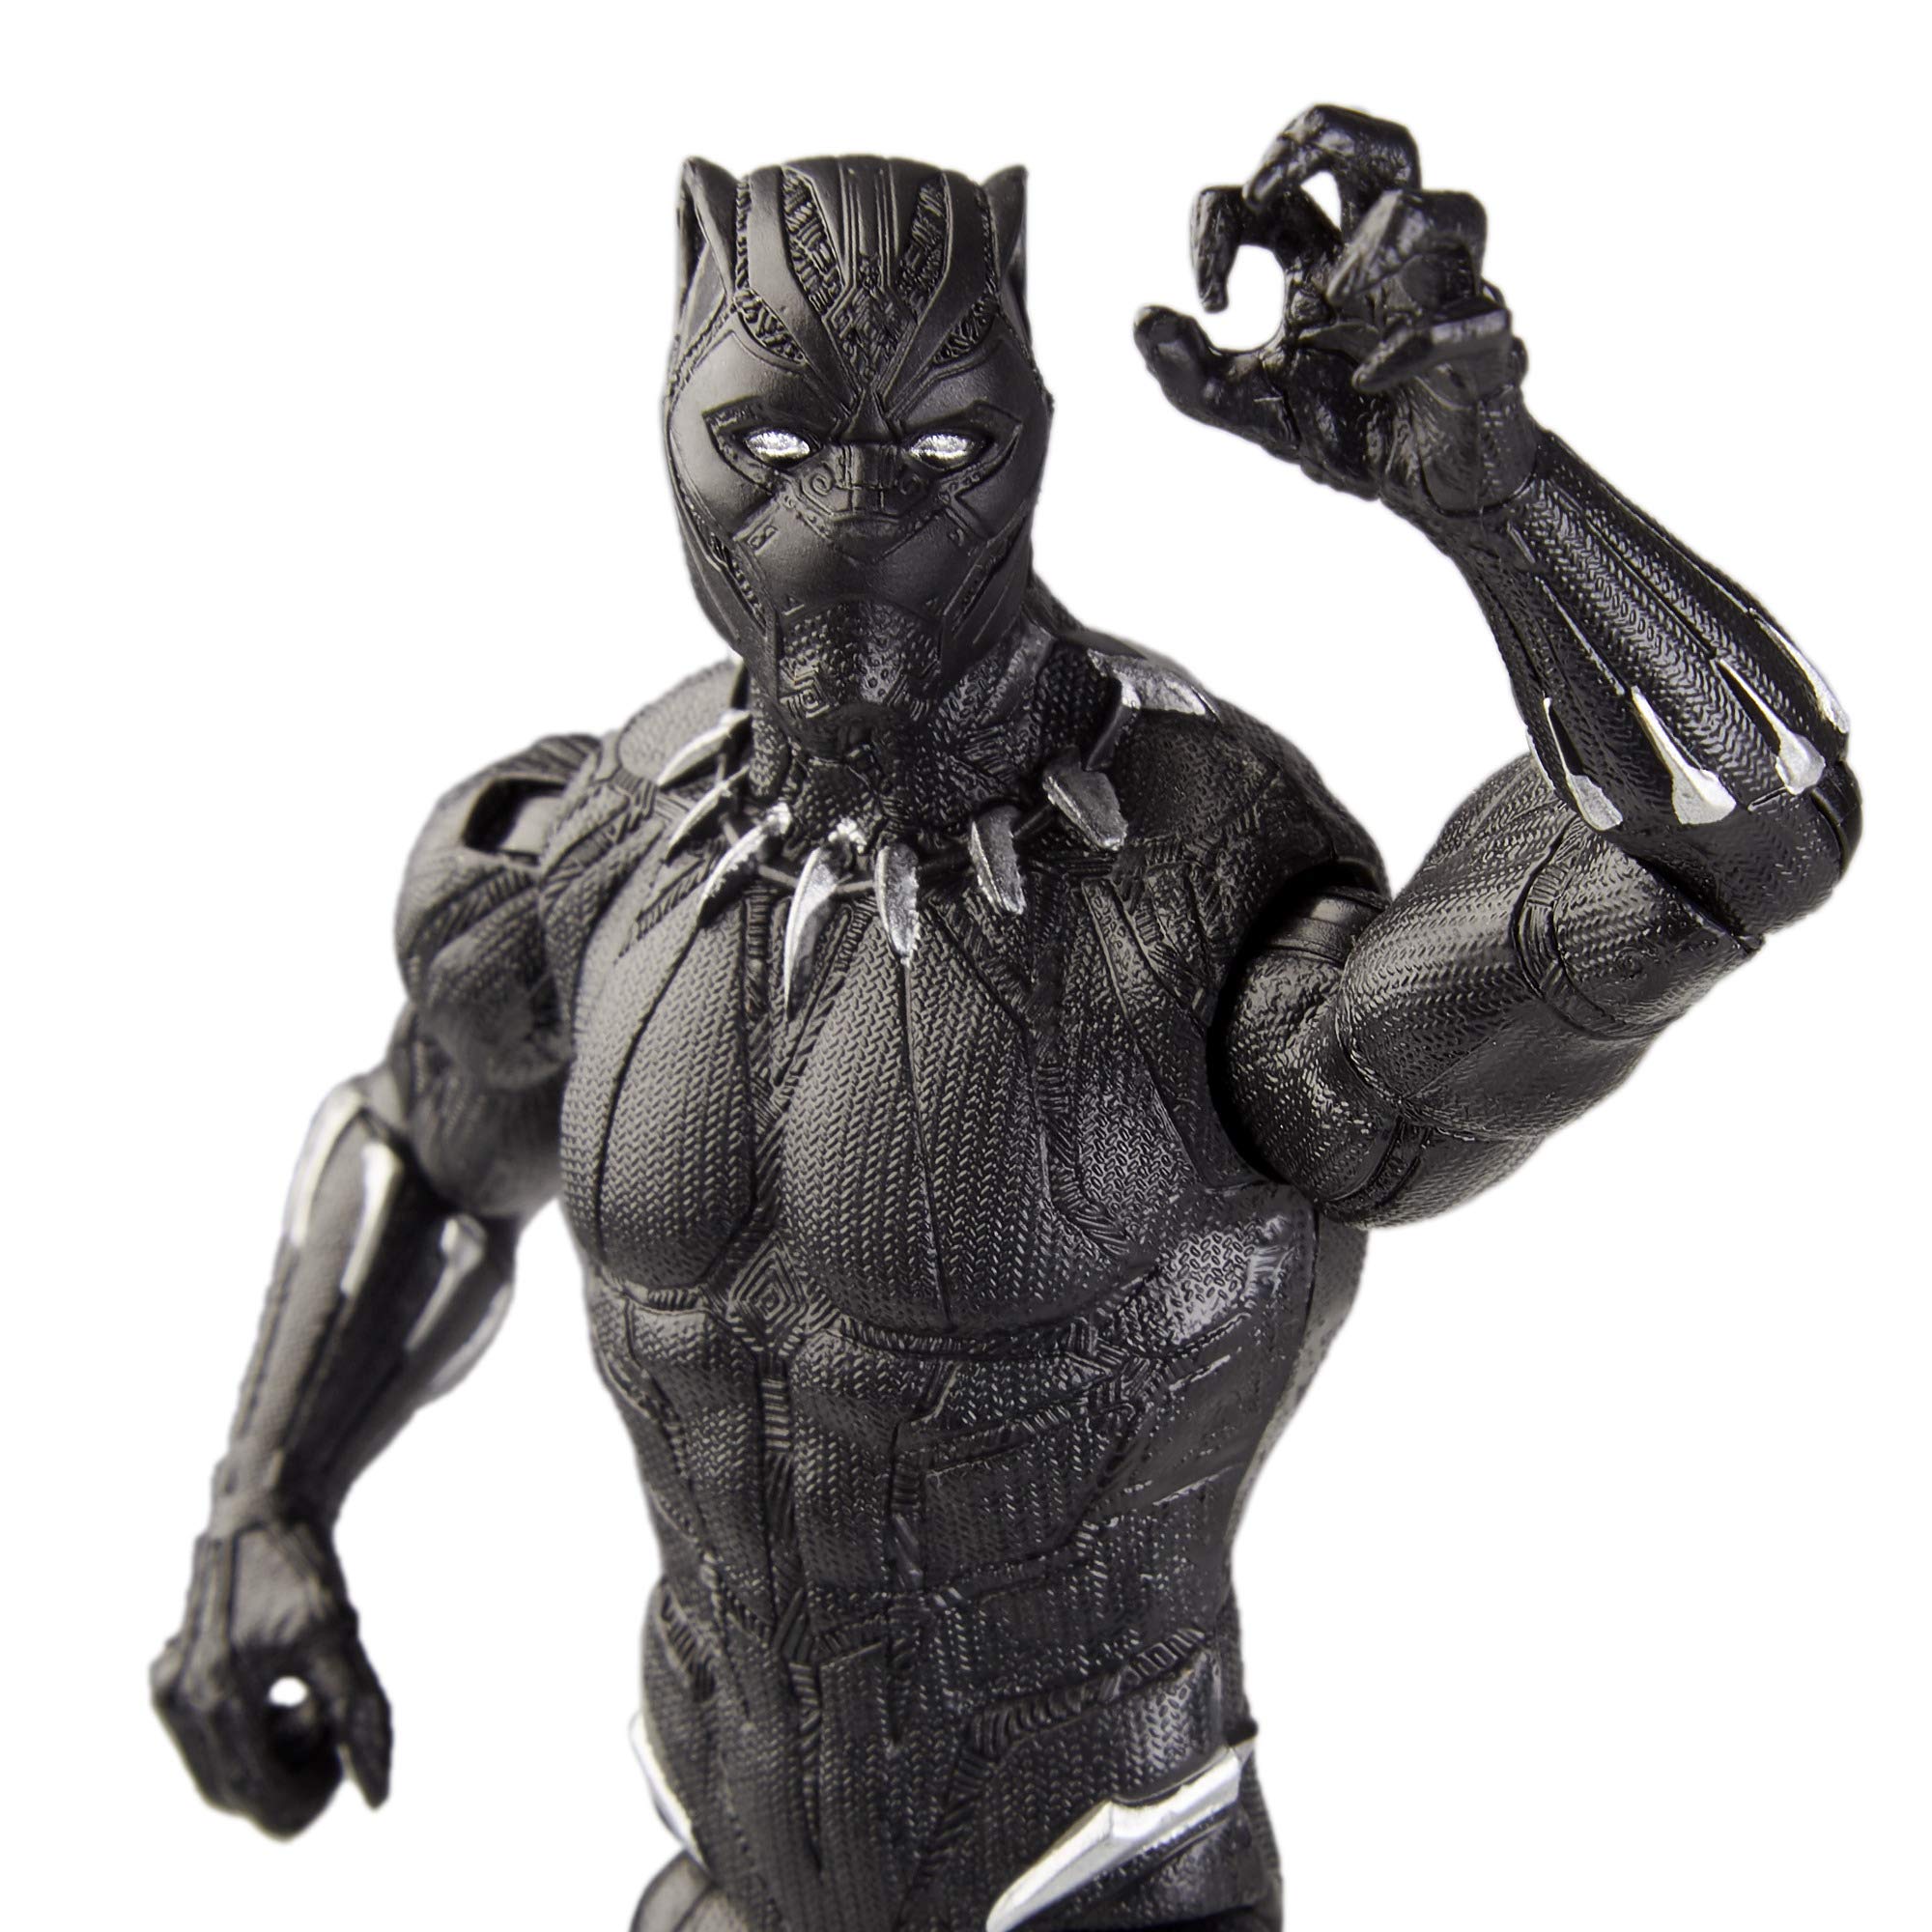 Avengers Marvel Black Panther 6